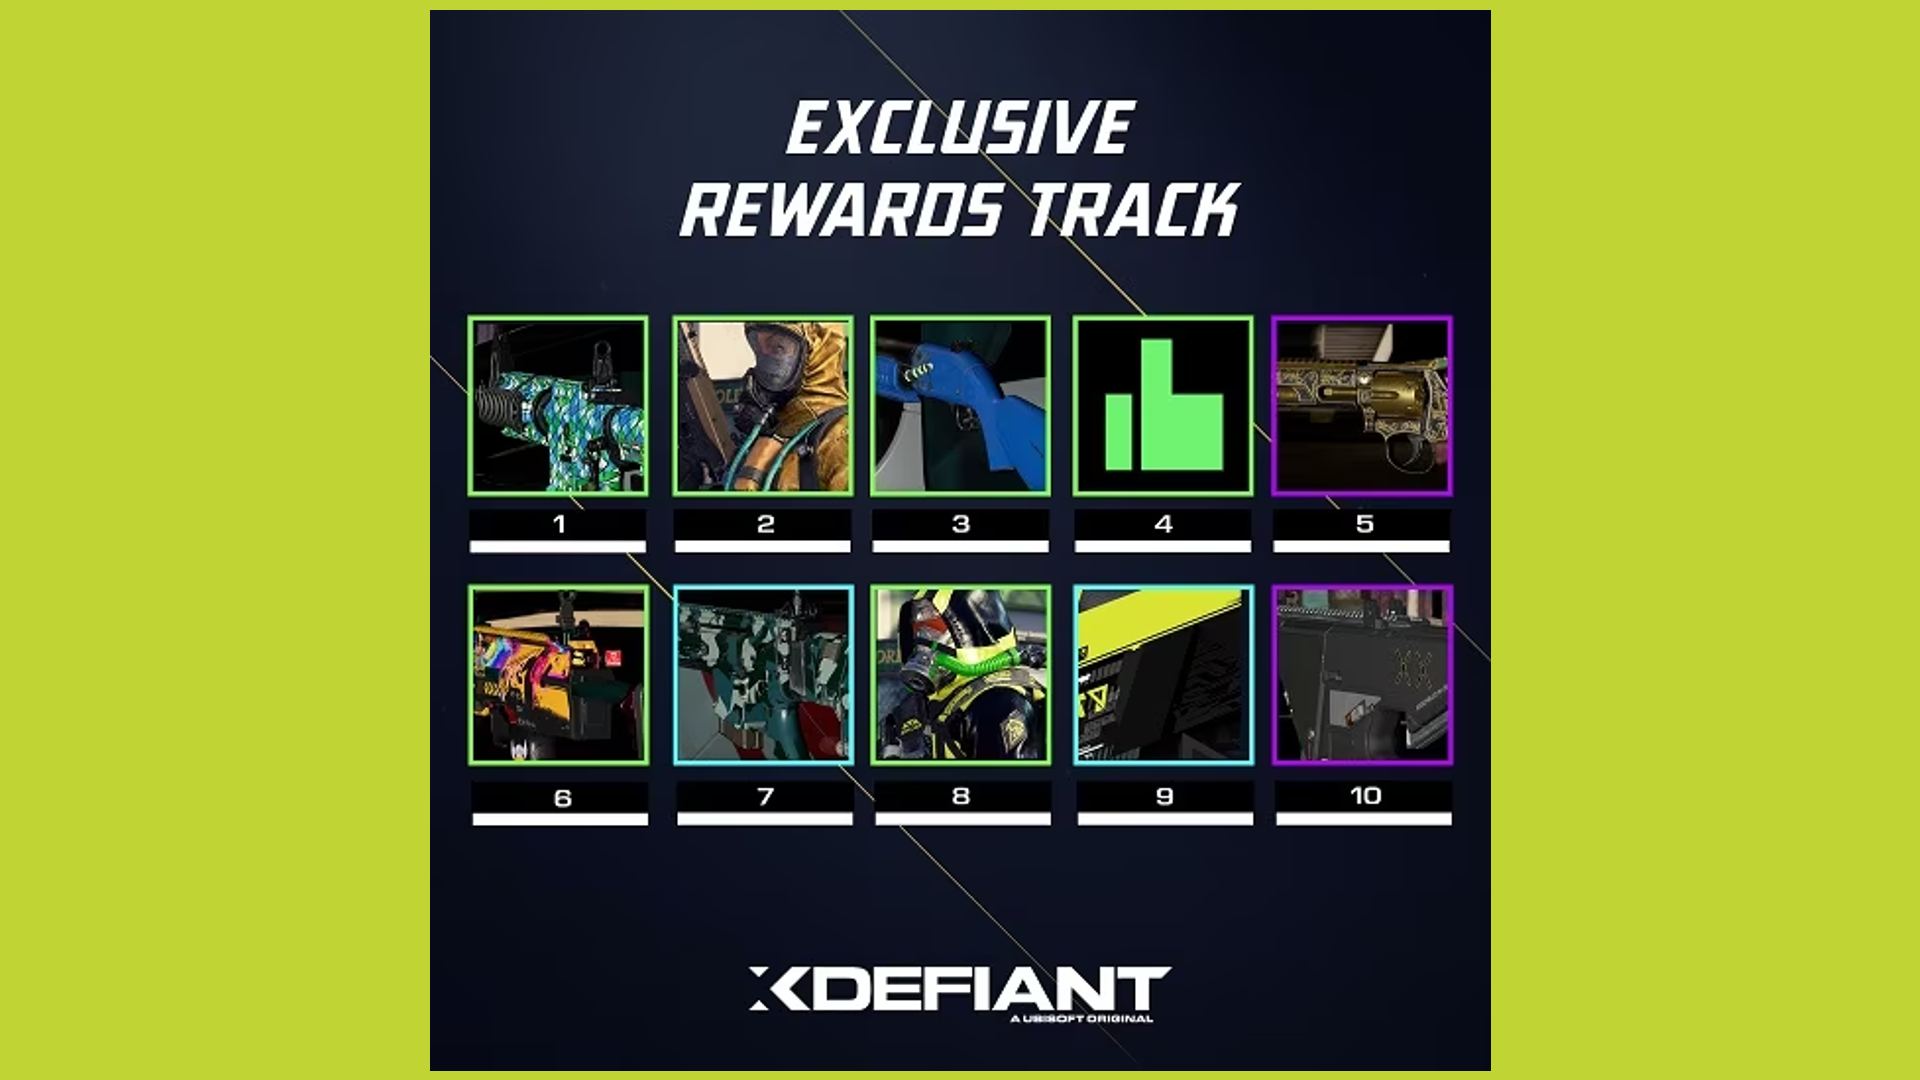 XDefiant Beta Rewards: Multiple rewards can be seen